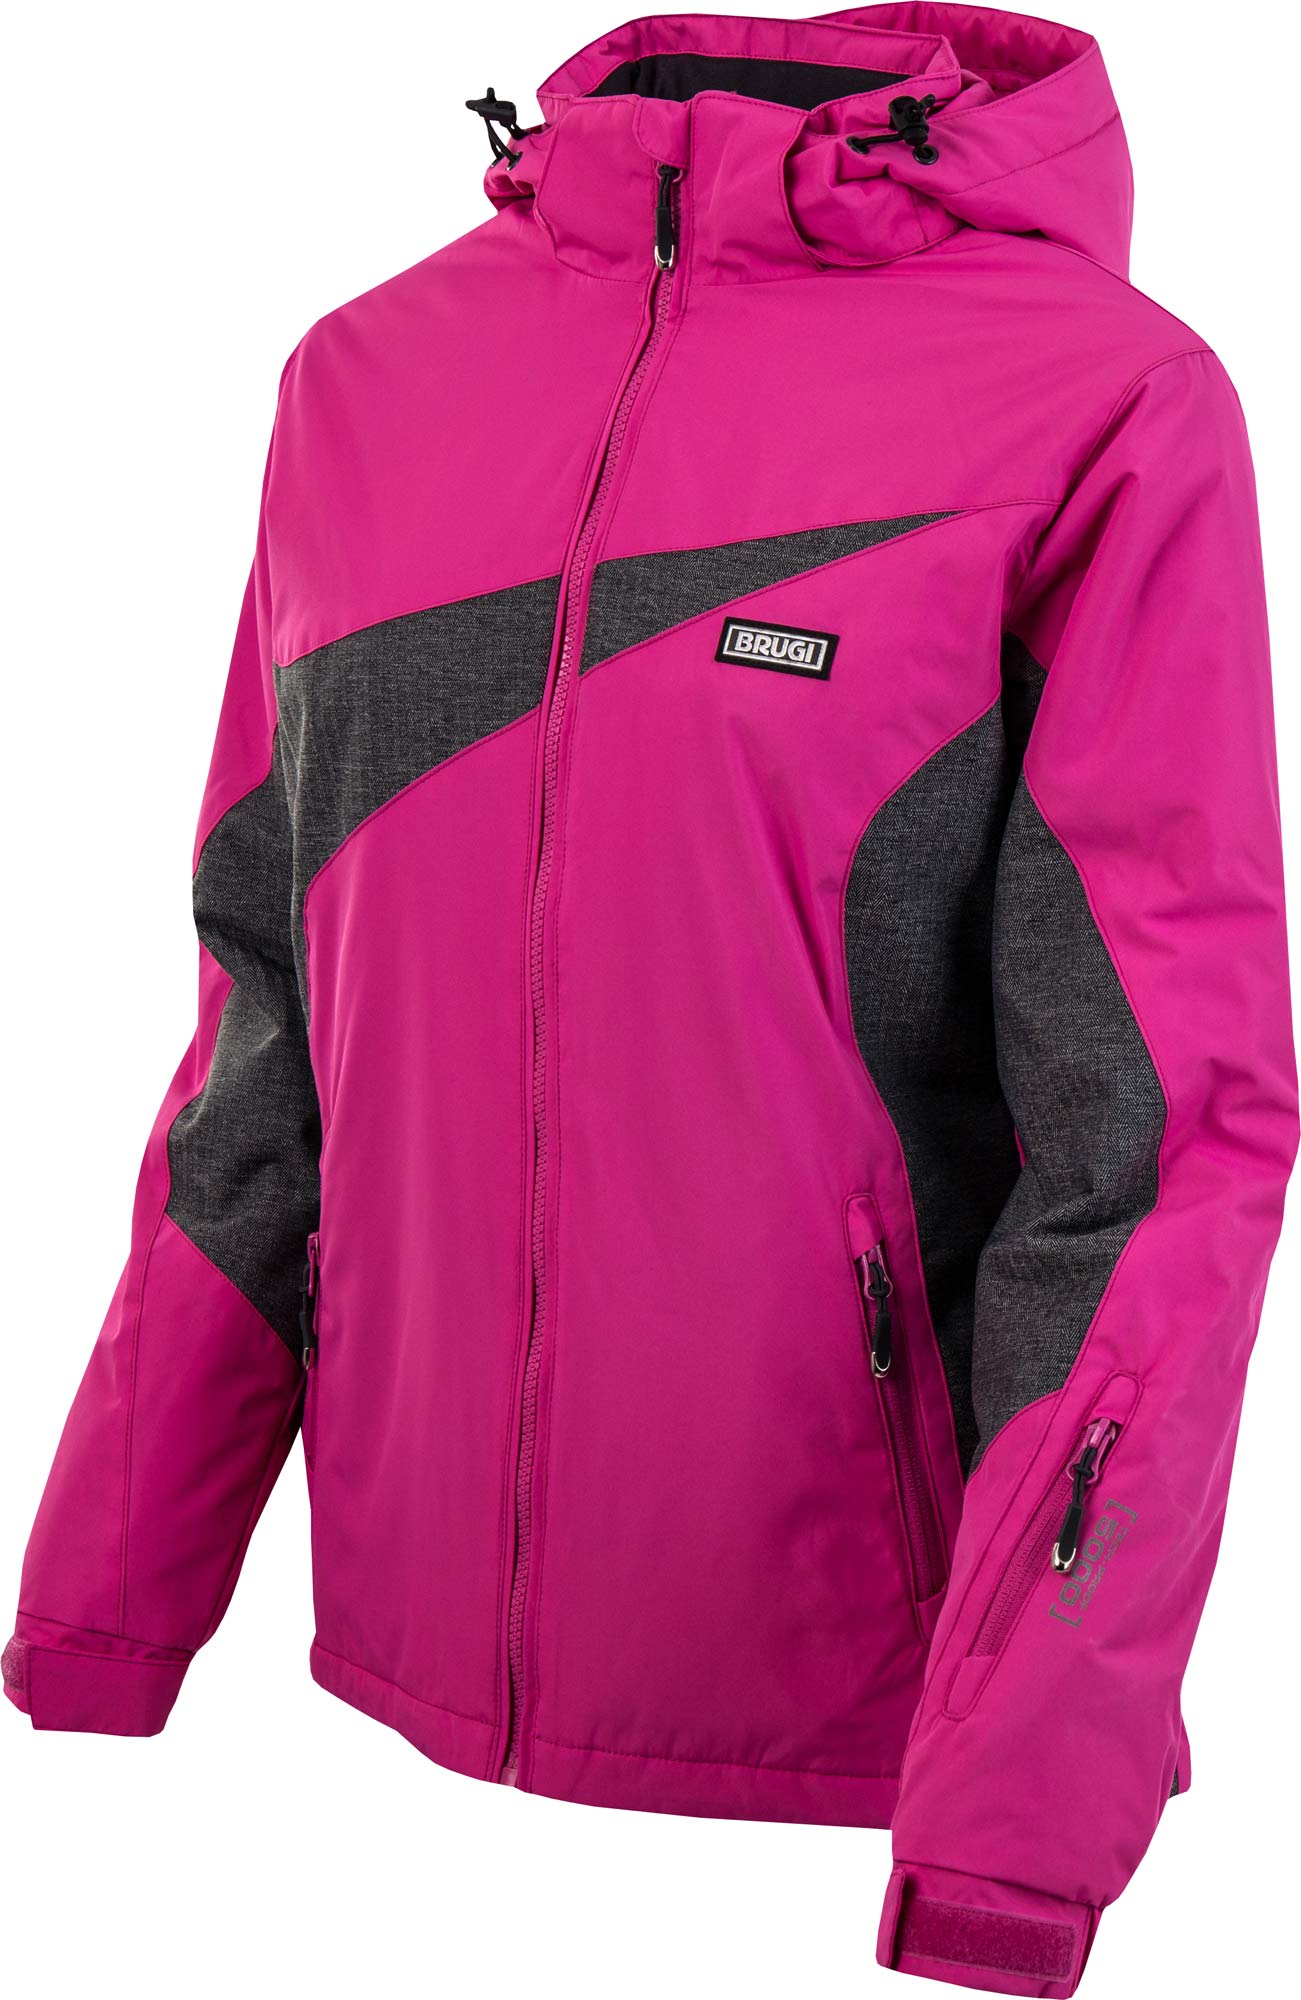 Brugi Women’s skiing jacket | sportisimo.com